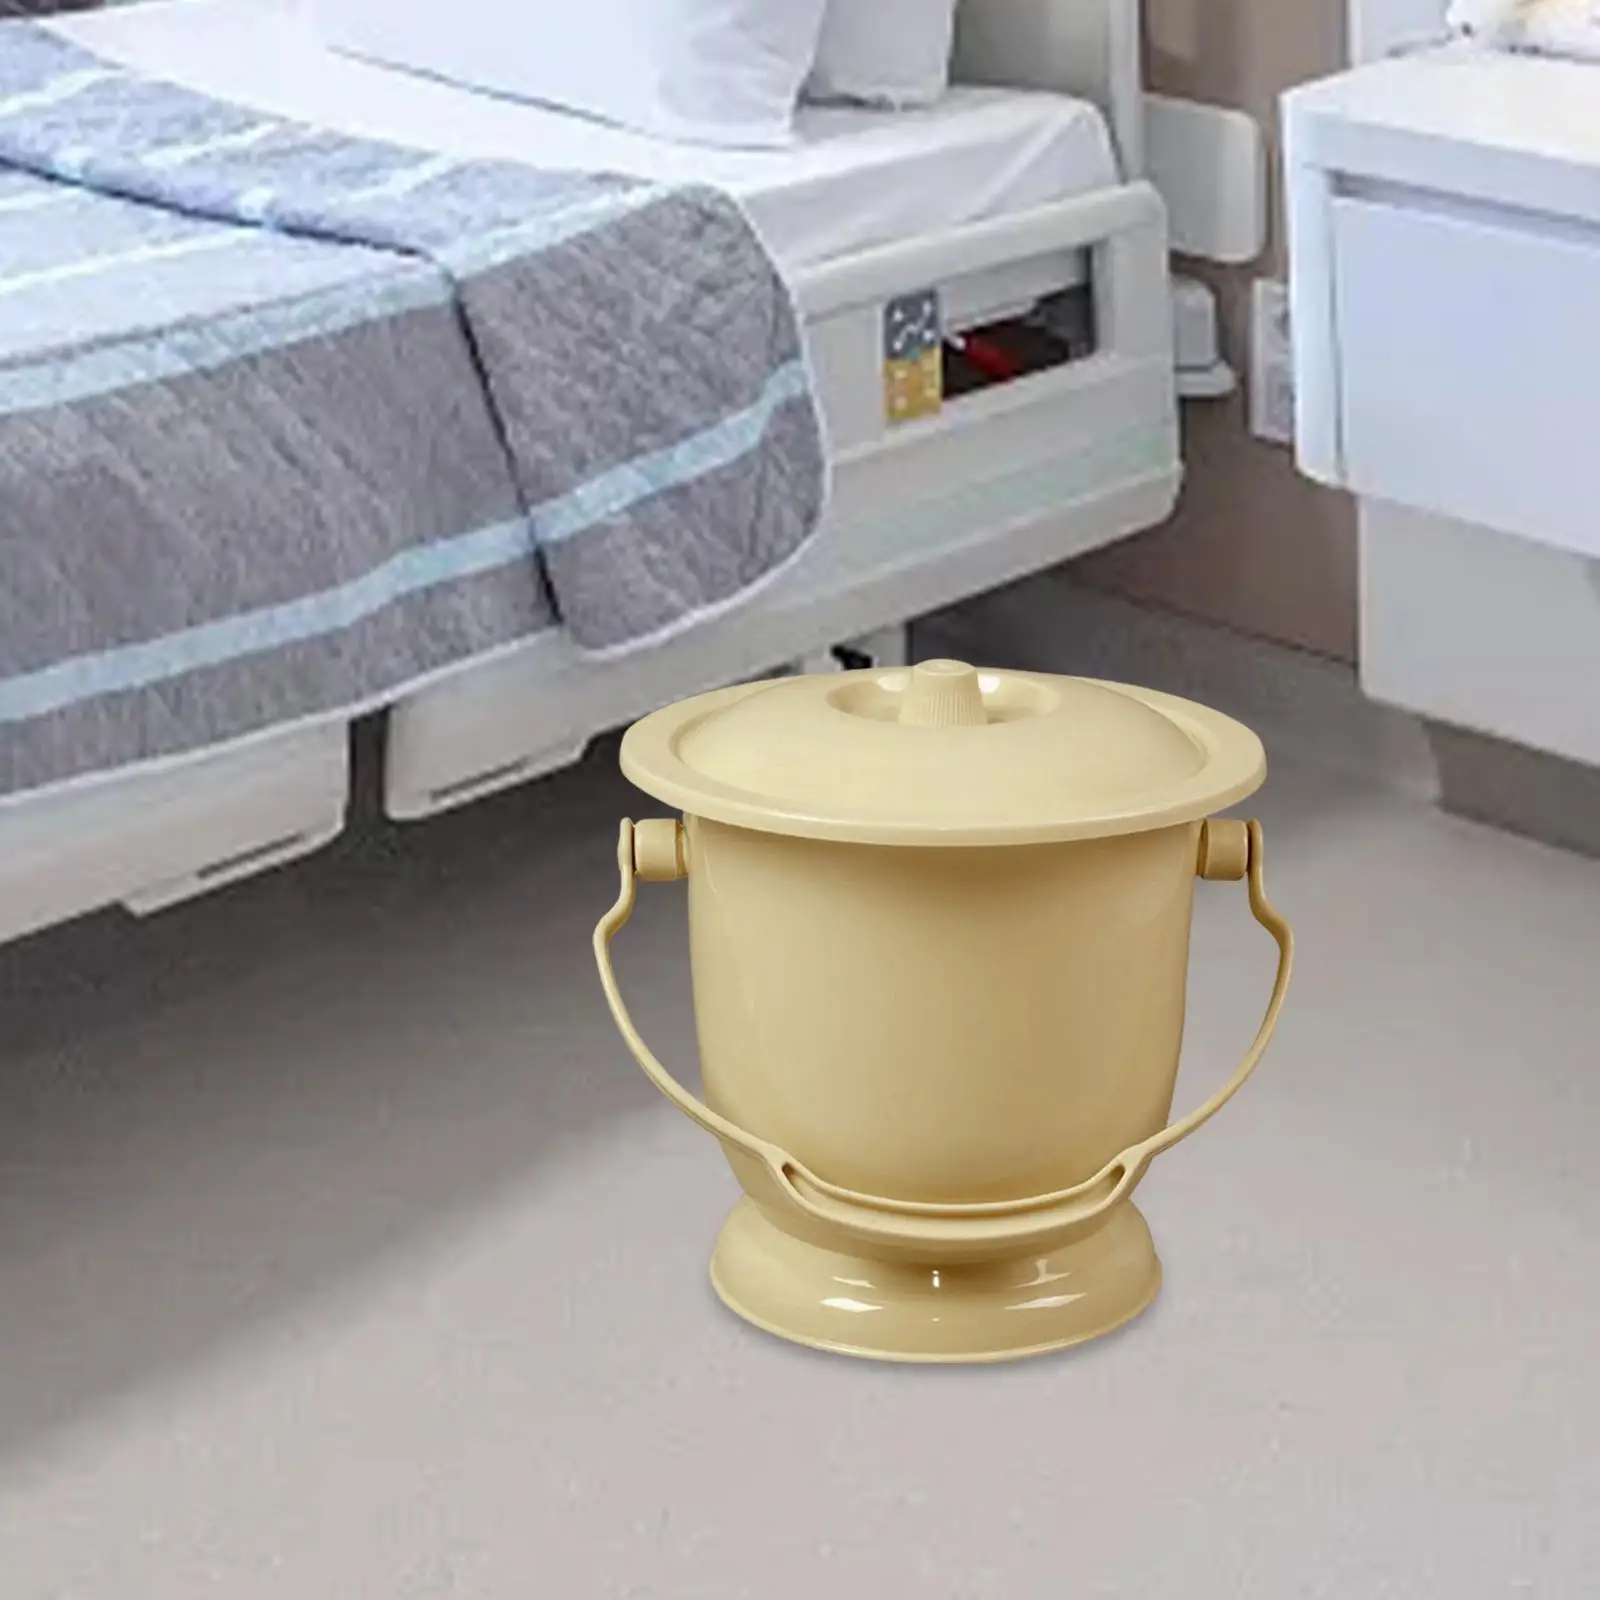 Household Chamber Pot with Lid Spittoon Bedpan Splashproof Home Use Plastic Bedroom Mini Toilets Night Pot Pee Potty Urine Pot